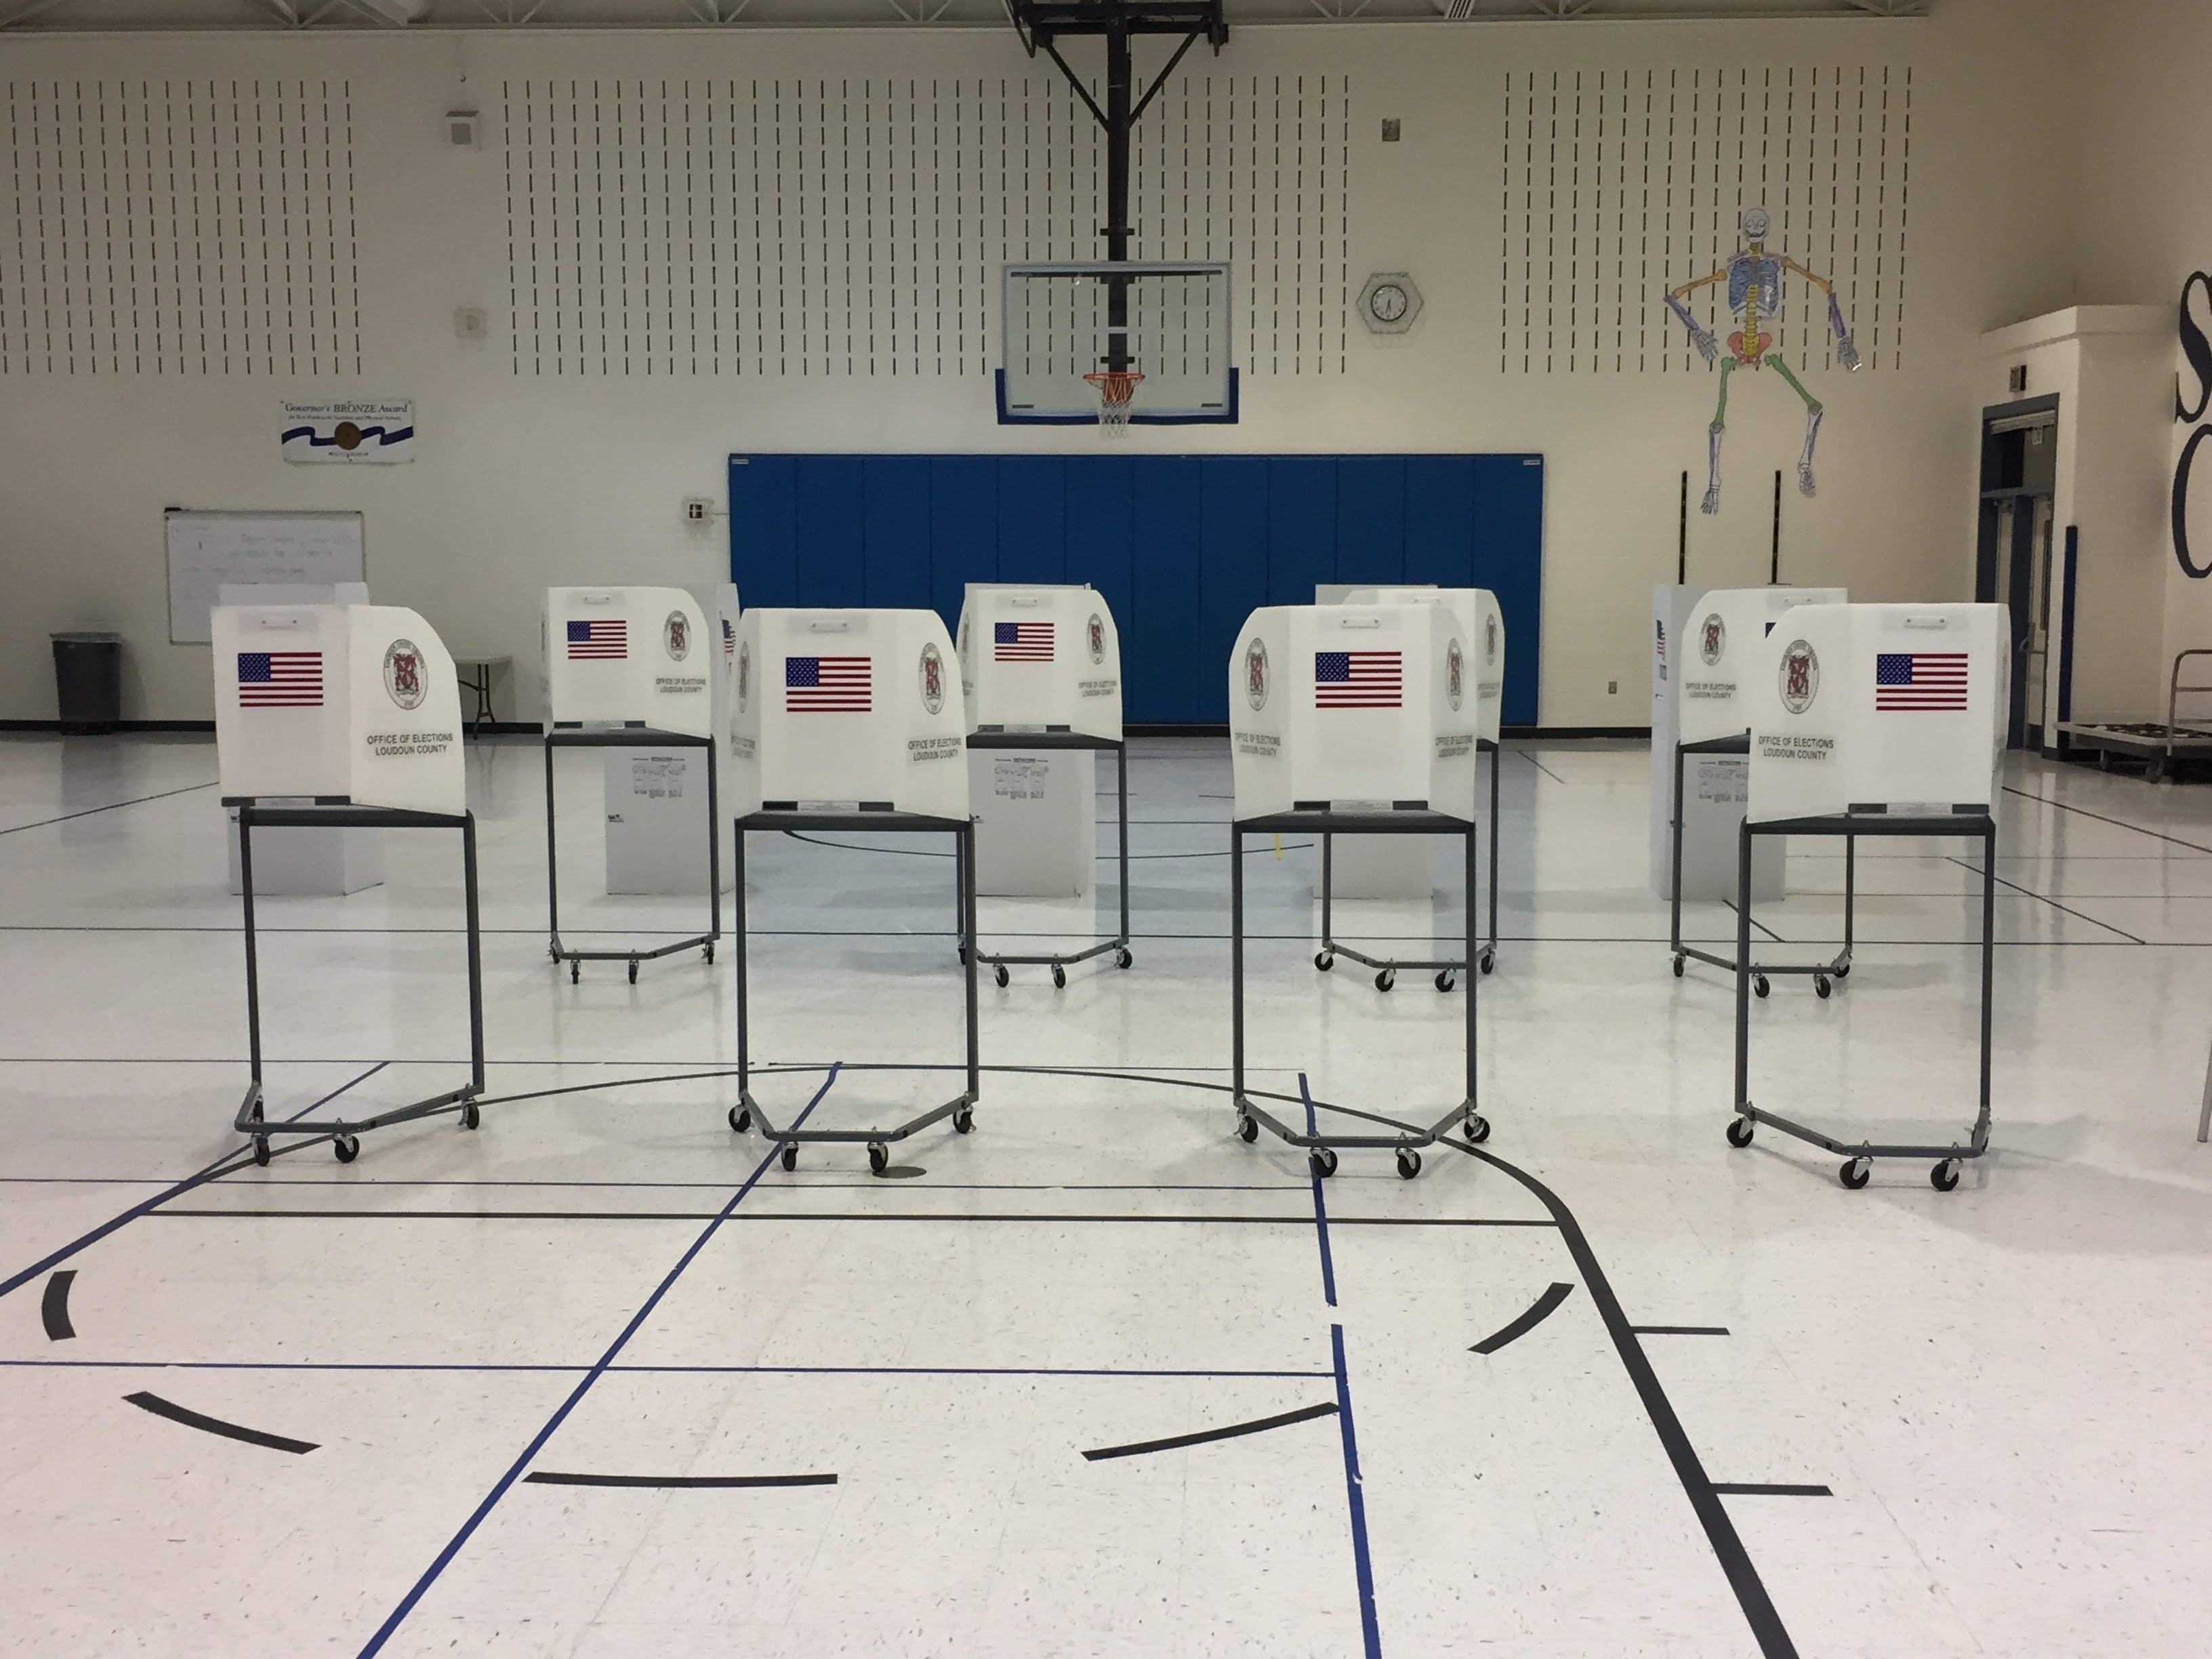 Voting has begun in the 2016 Presidential Election in Ashburn, VA.